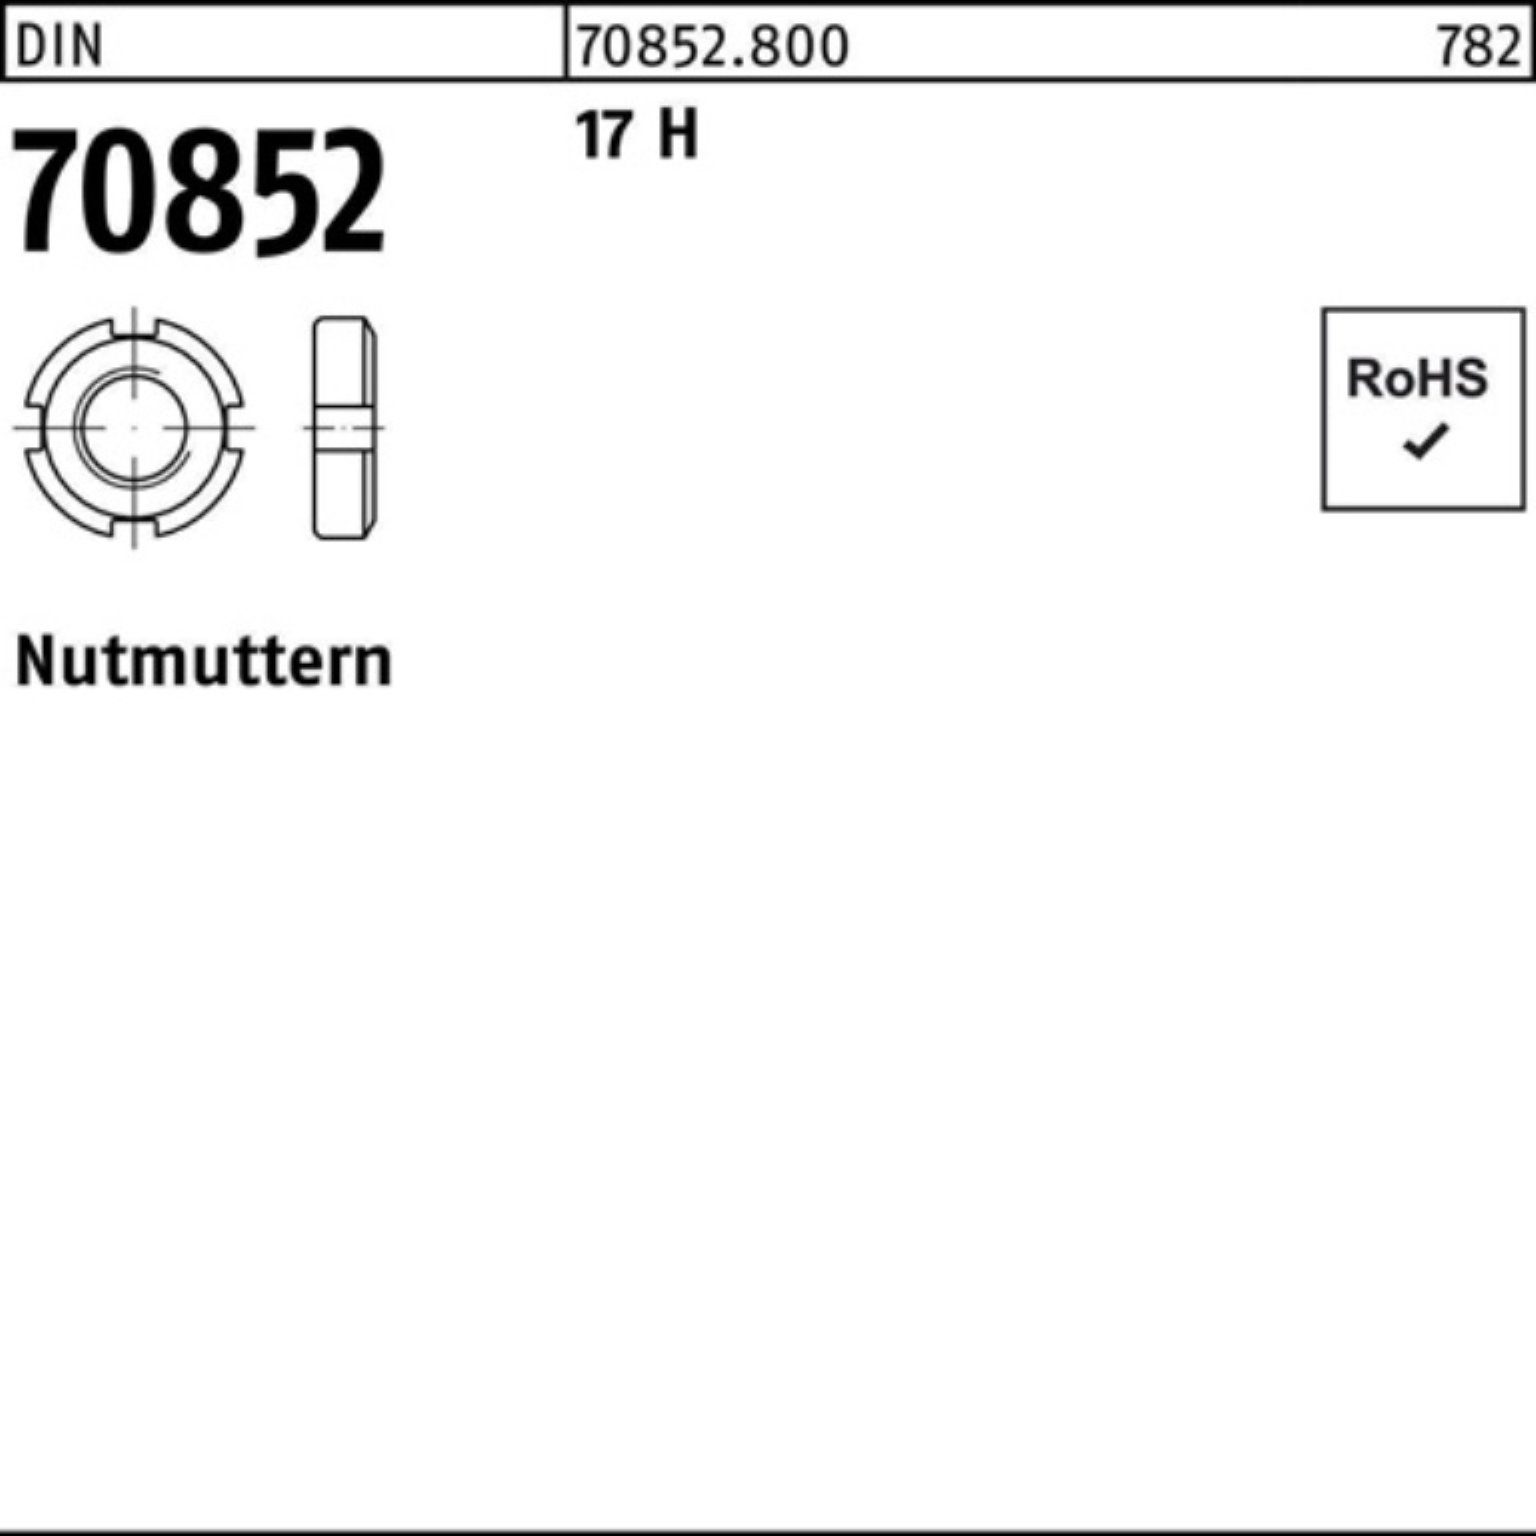 Nutmutter H 17 70852 DIN 100er 70852 H 10 Pack 1,5 Nutmutter DIN 17 Reyher Stück M26x